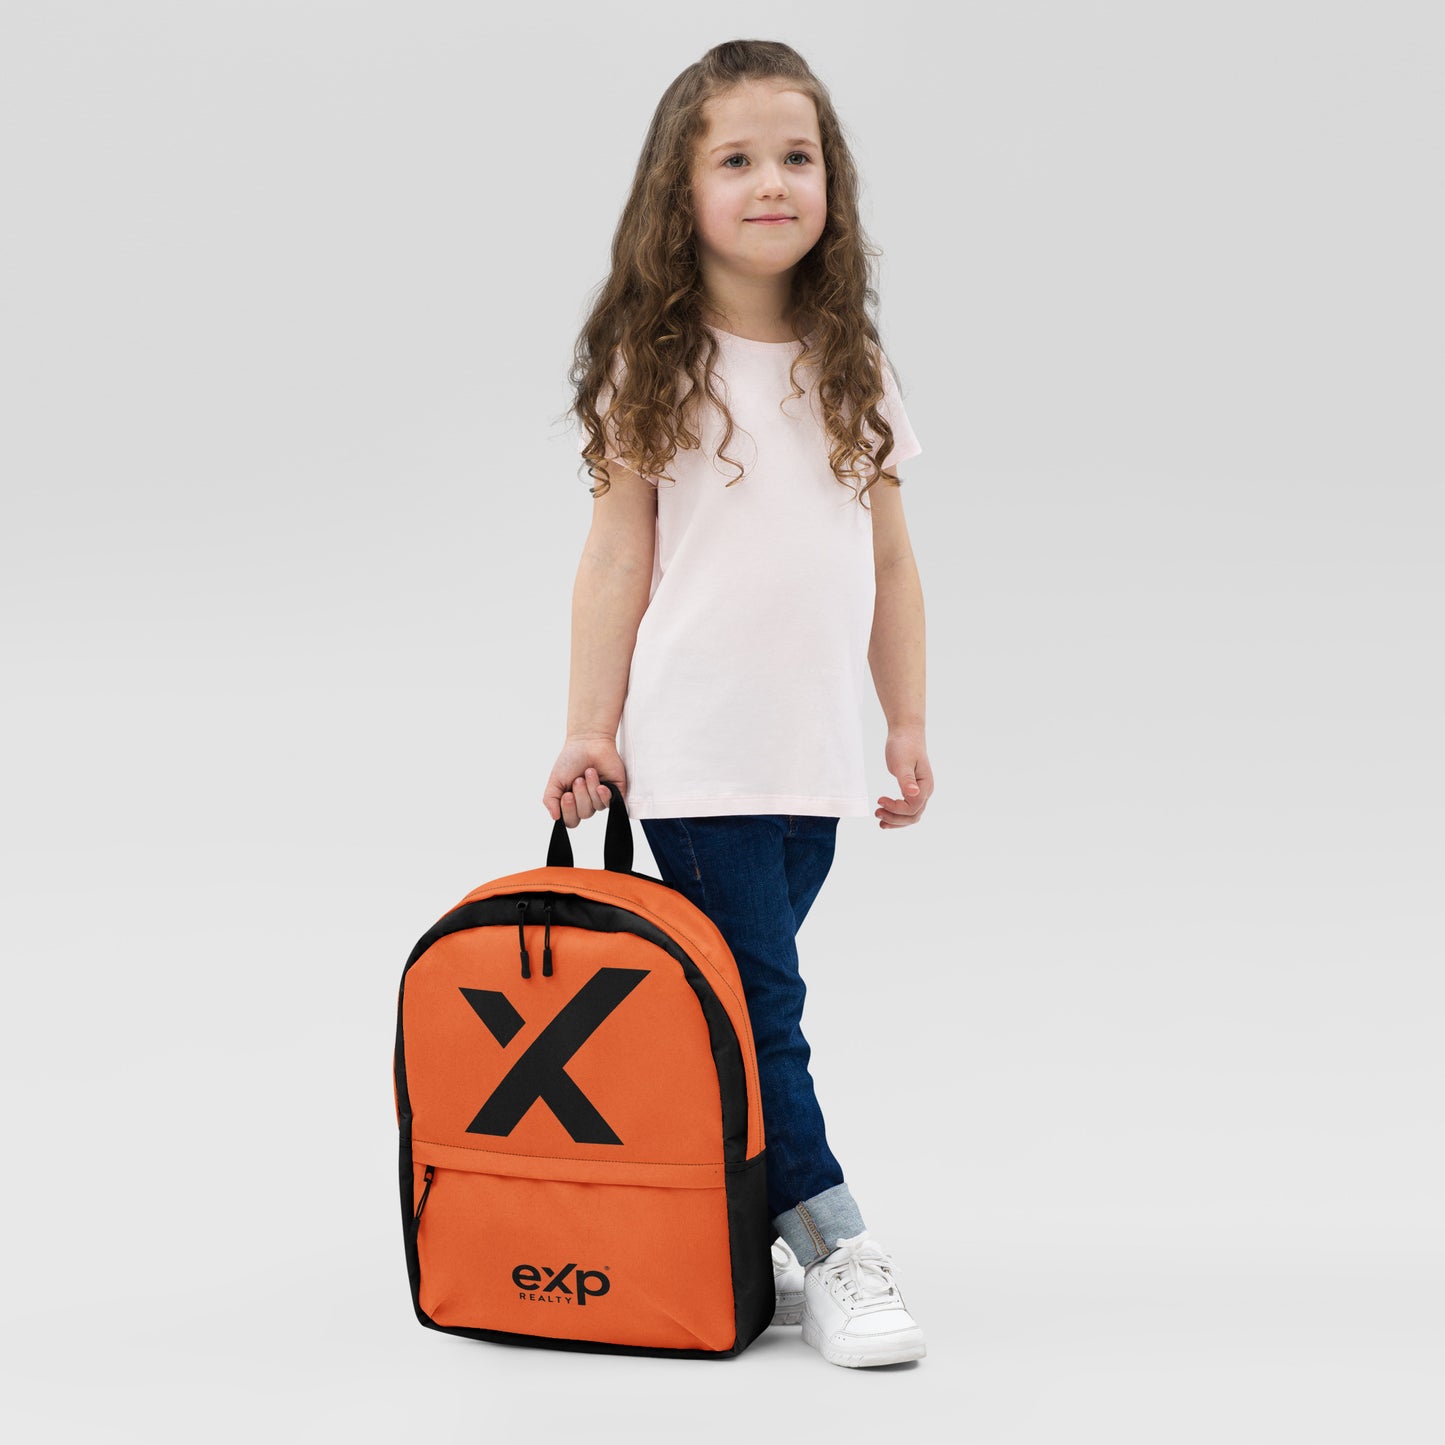 eXp Backpack Orange